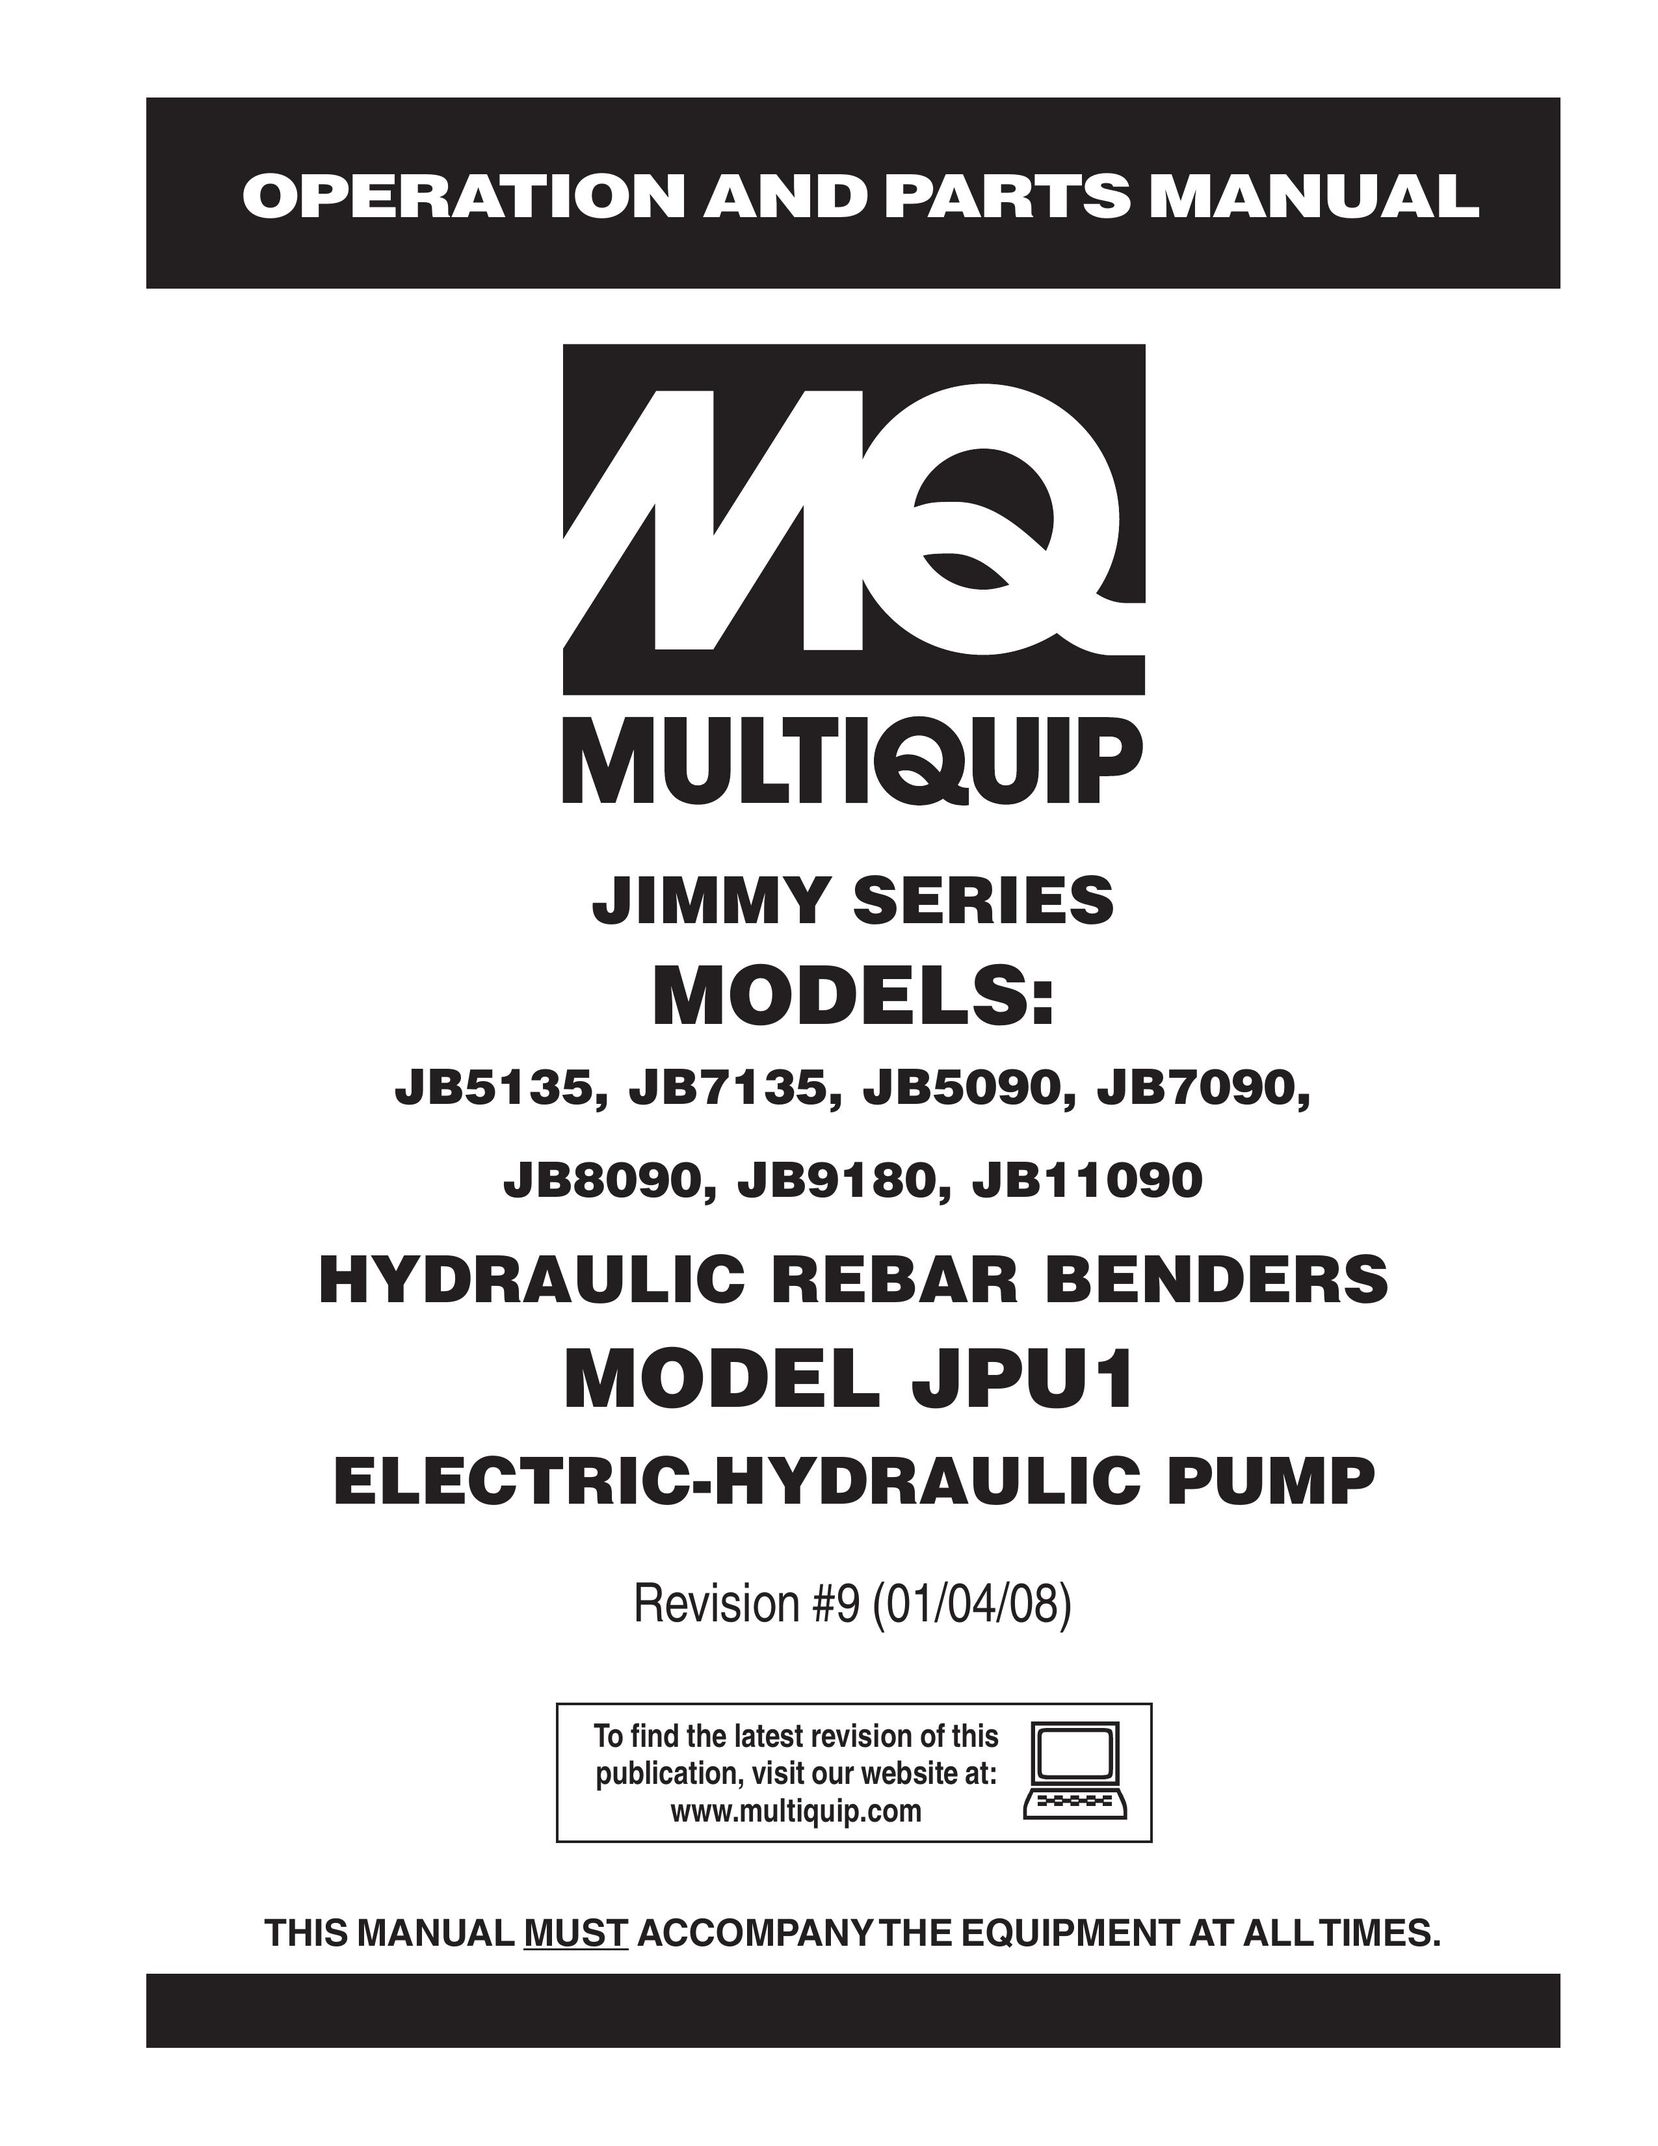 Multiquip JB5135 Heat Pump User Manual